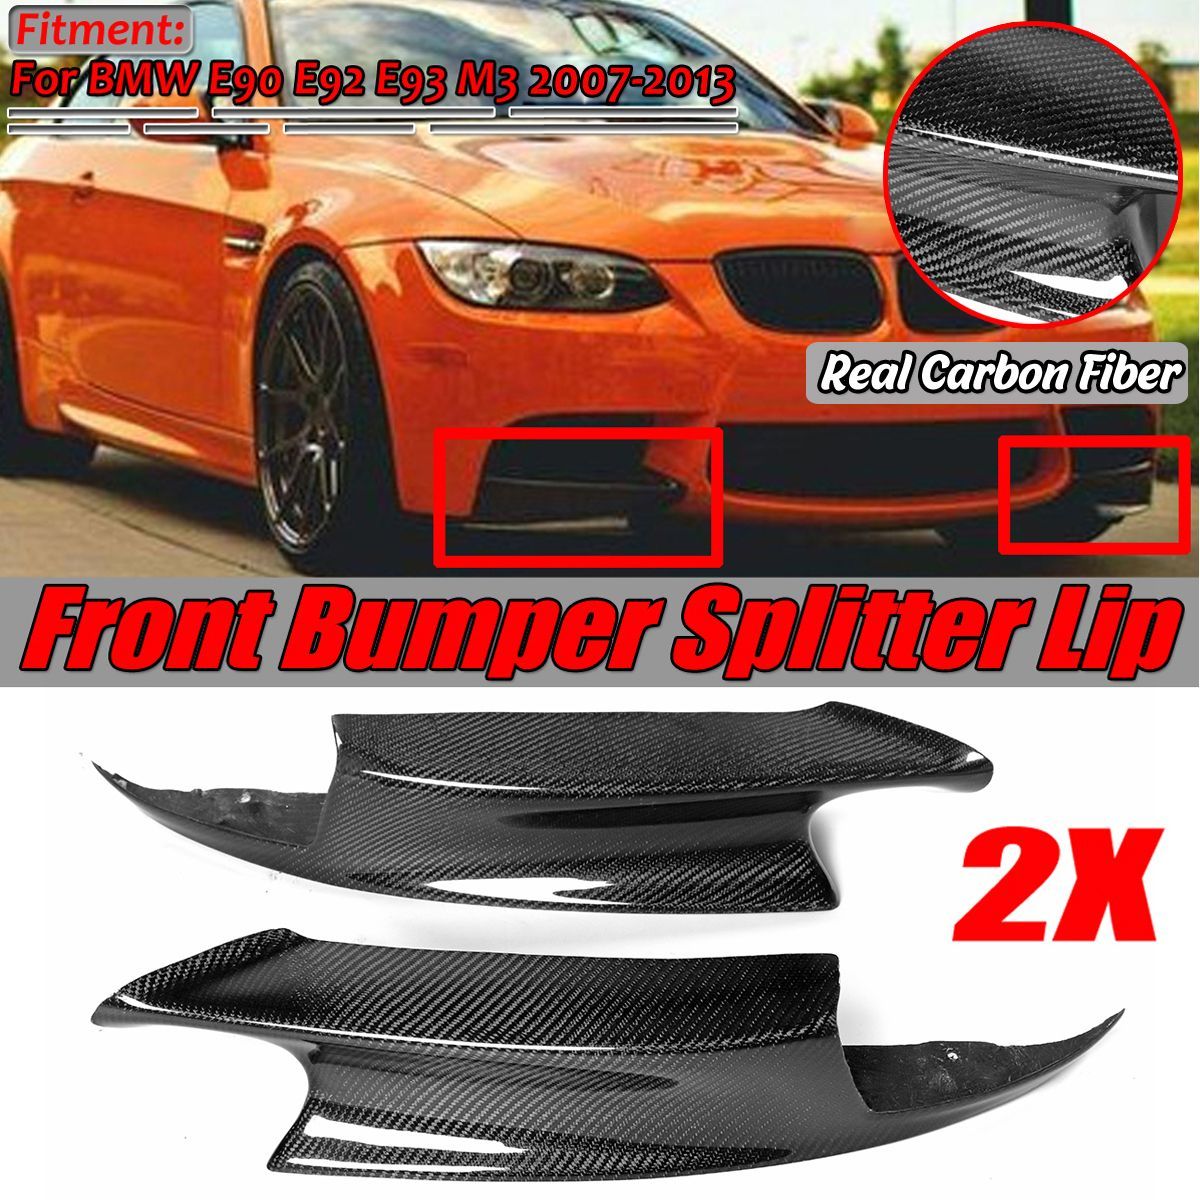 2Pcs-Car-Real-Carbon-Fiber-Front-Bumper-Splitter-Lip-Left--Right-For-BMW-E90-E92-E93-M3-2007-2013-1685702